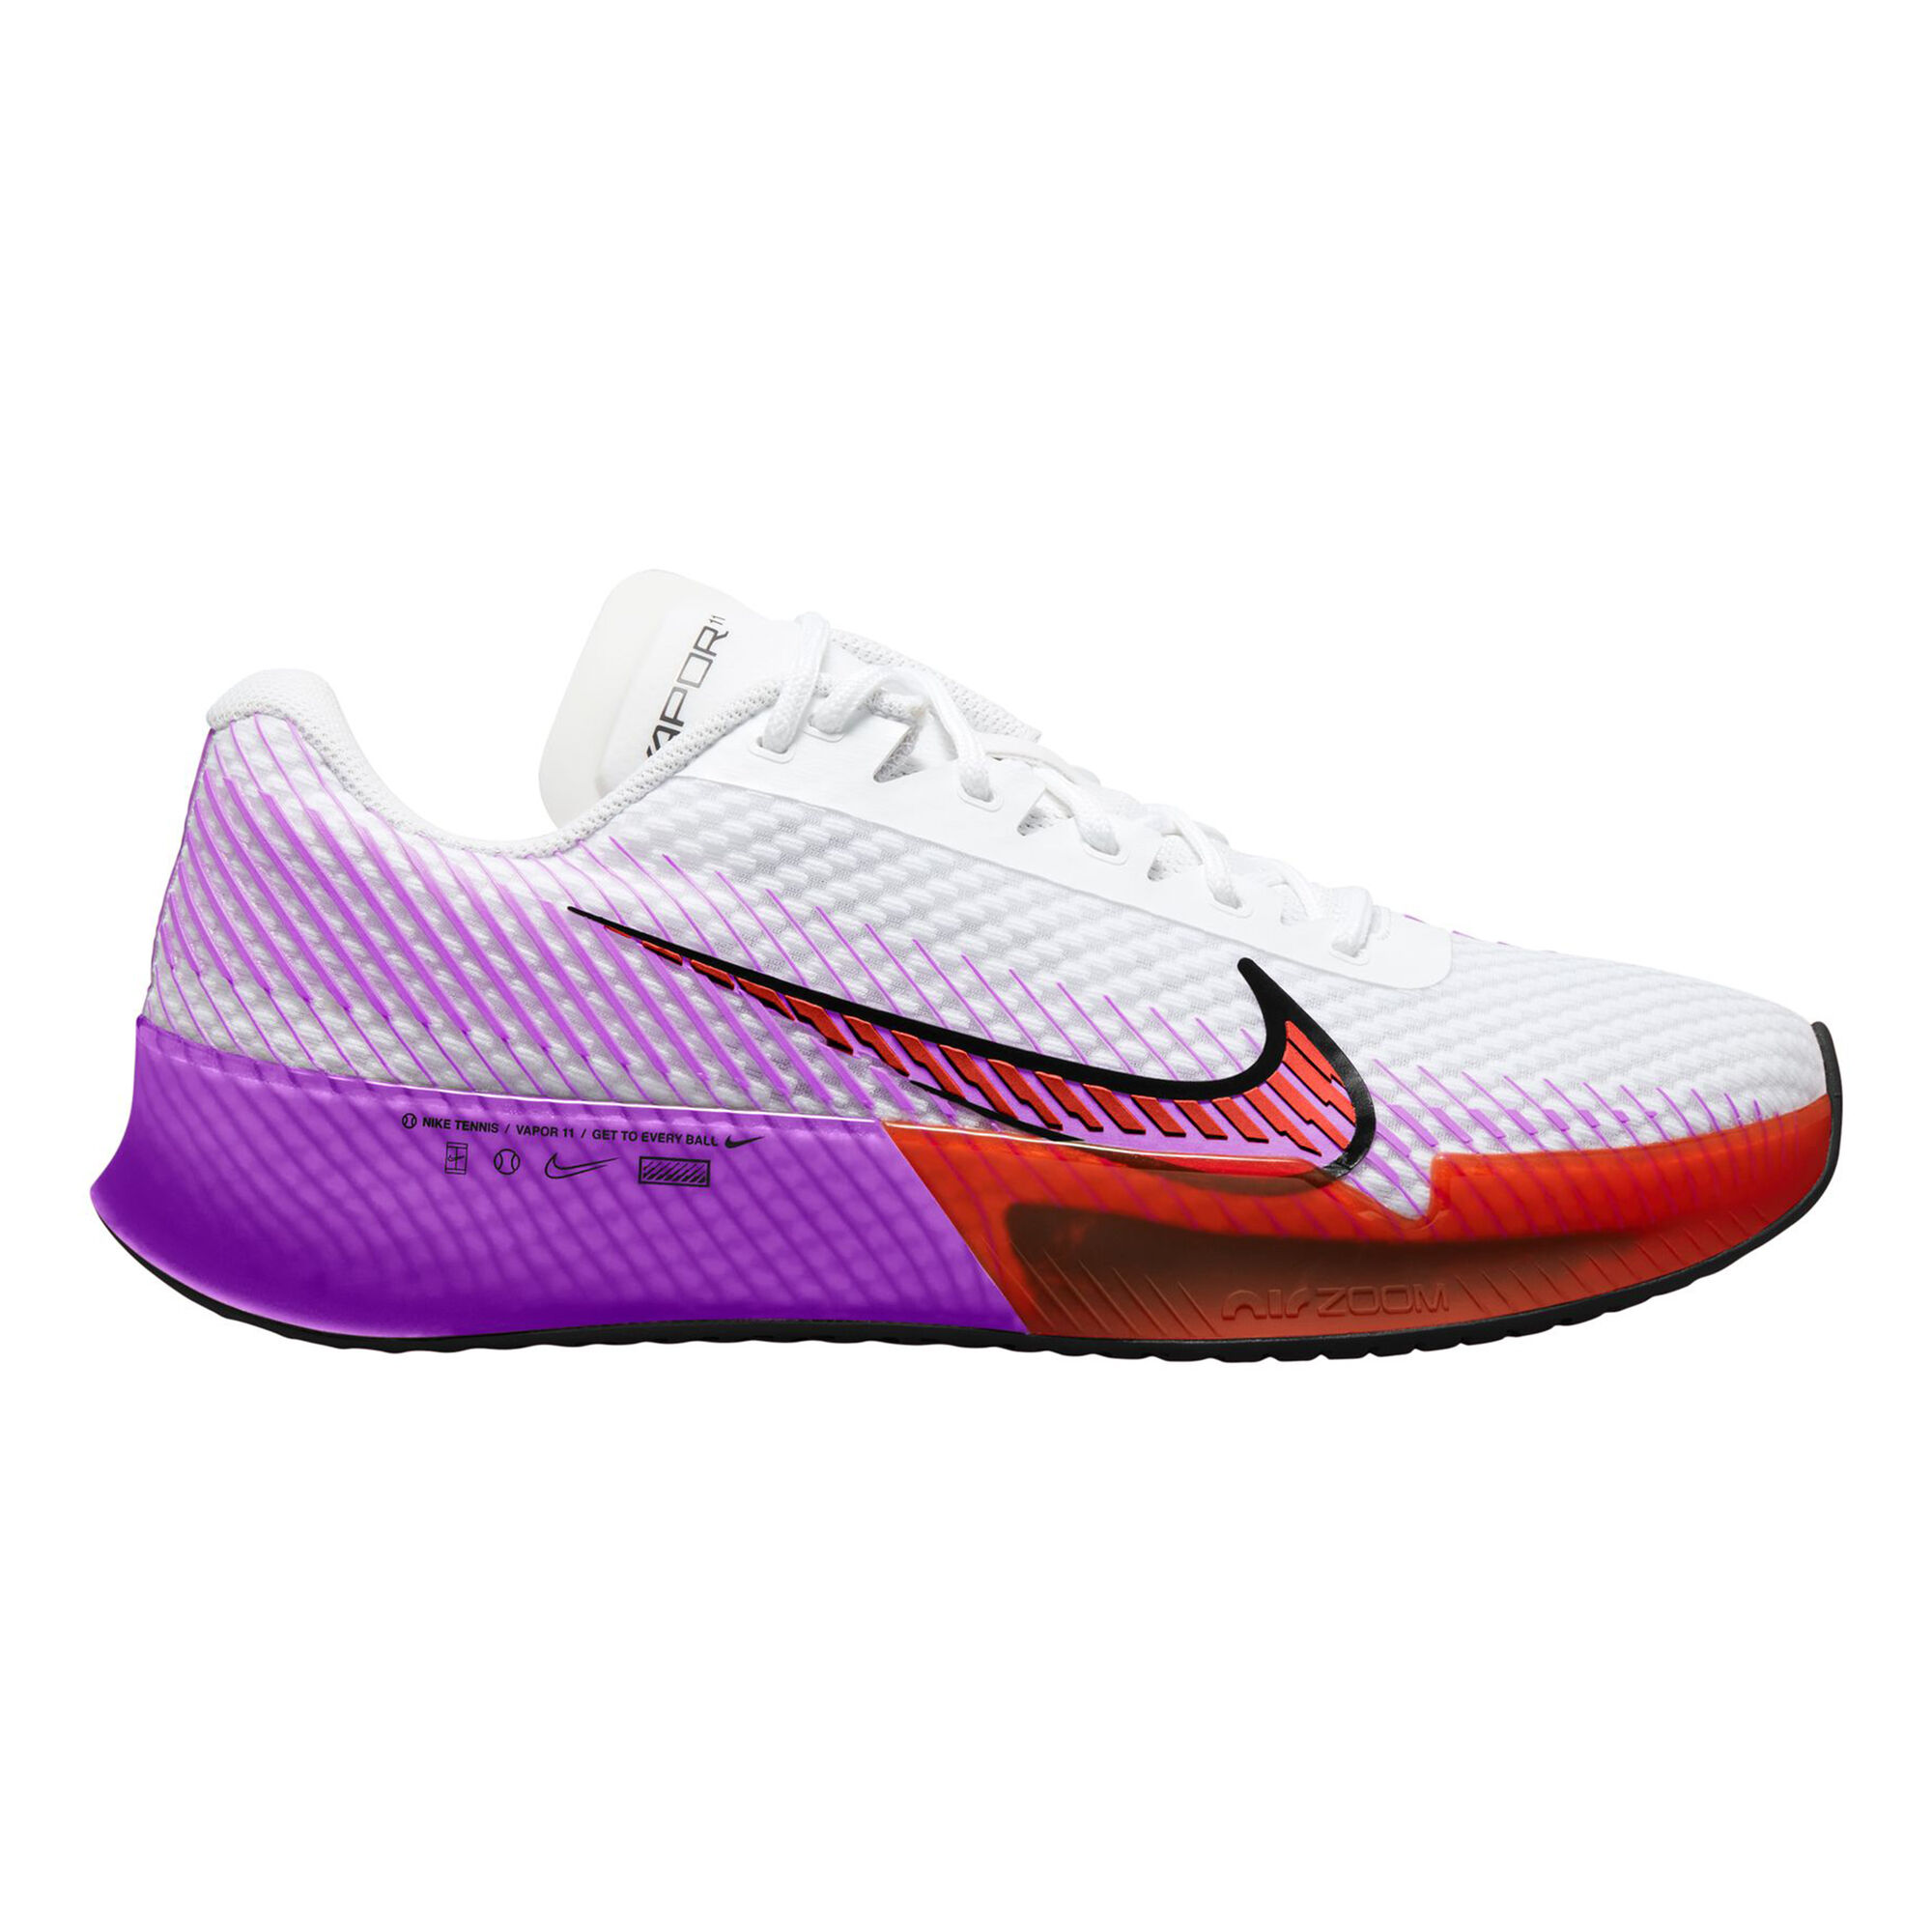 buy Nike Air Zoom Vapor 11 All Court Shoe Men Violet online Tennis-Point